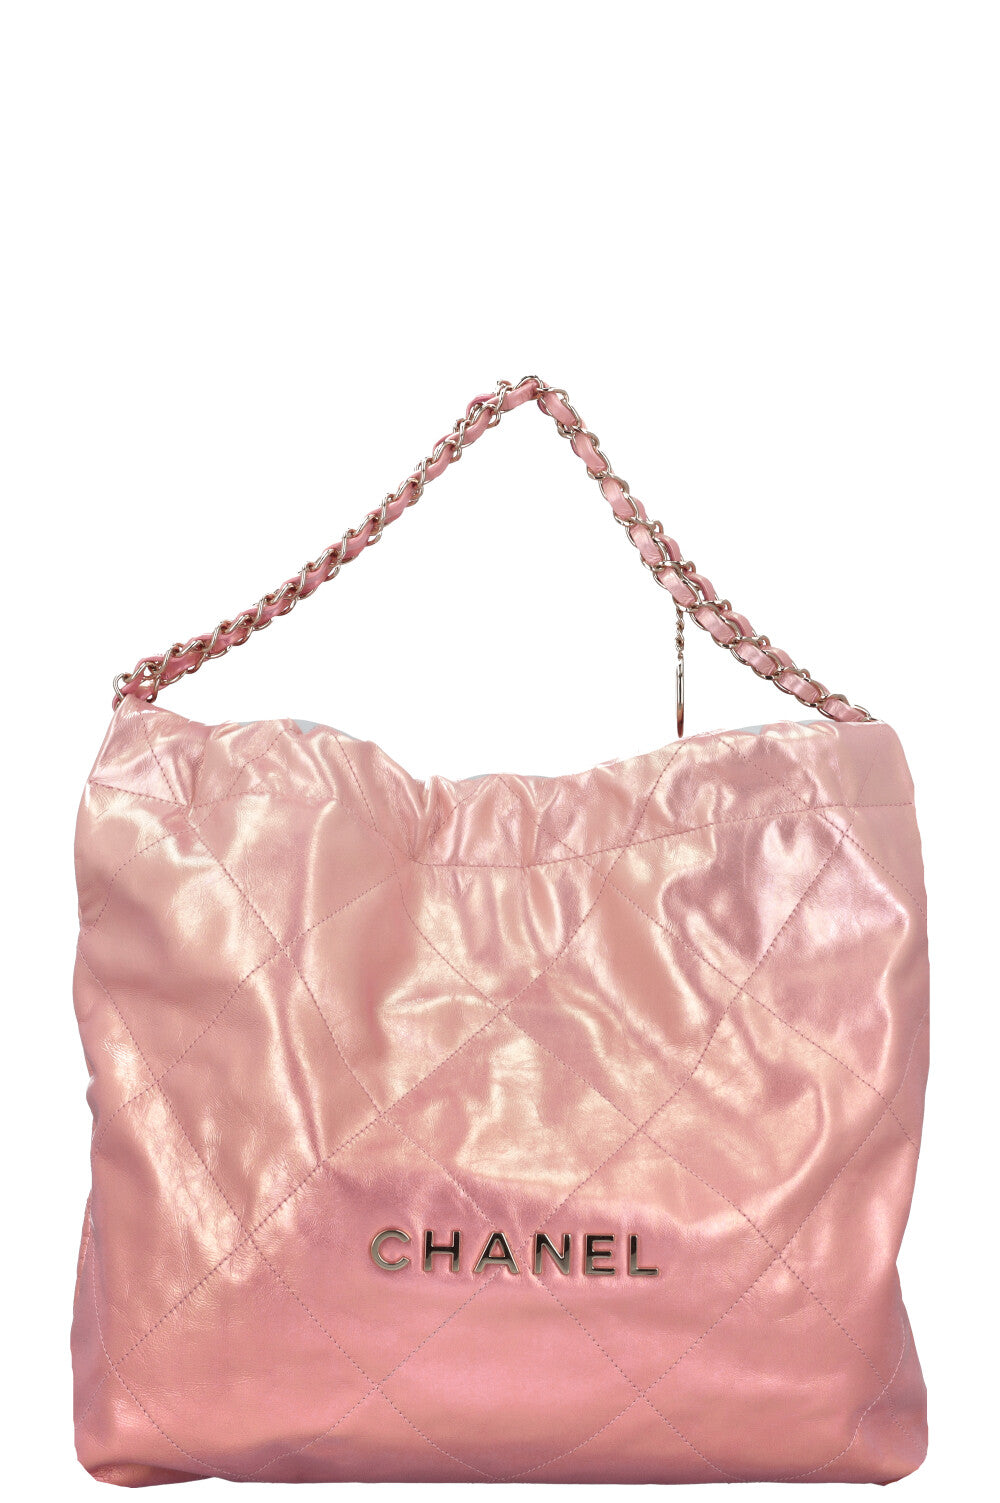 CHANEL 22 Smal Bag Metallic Pink